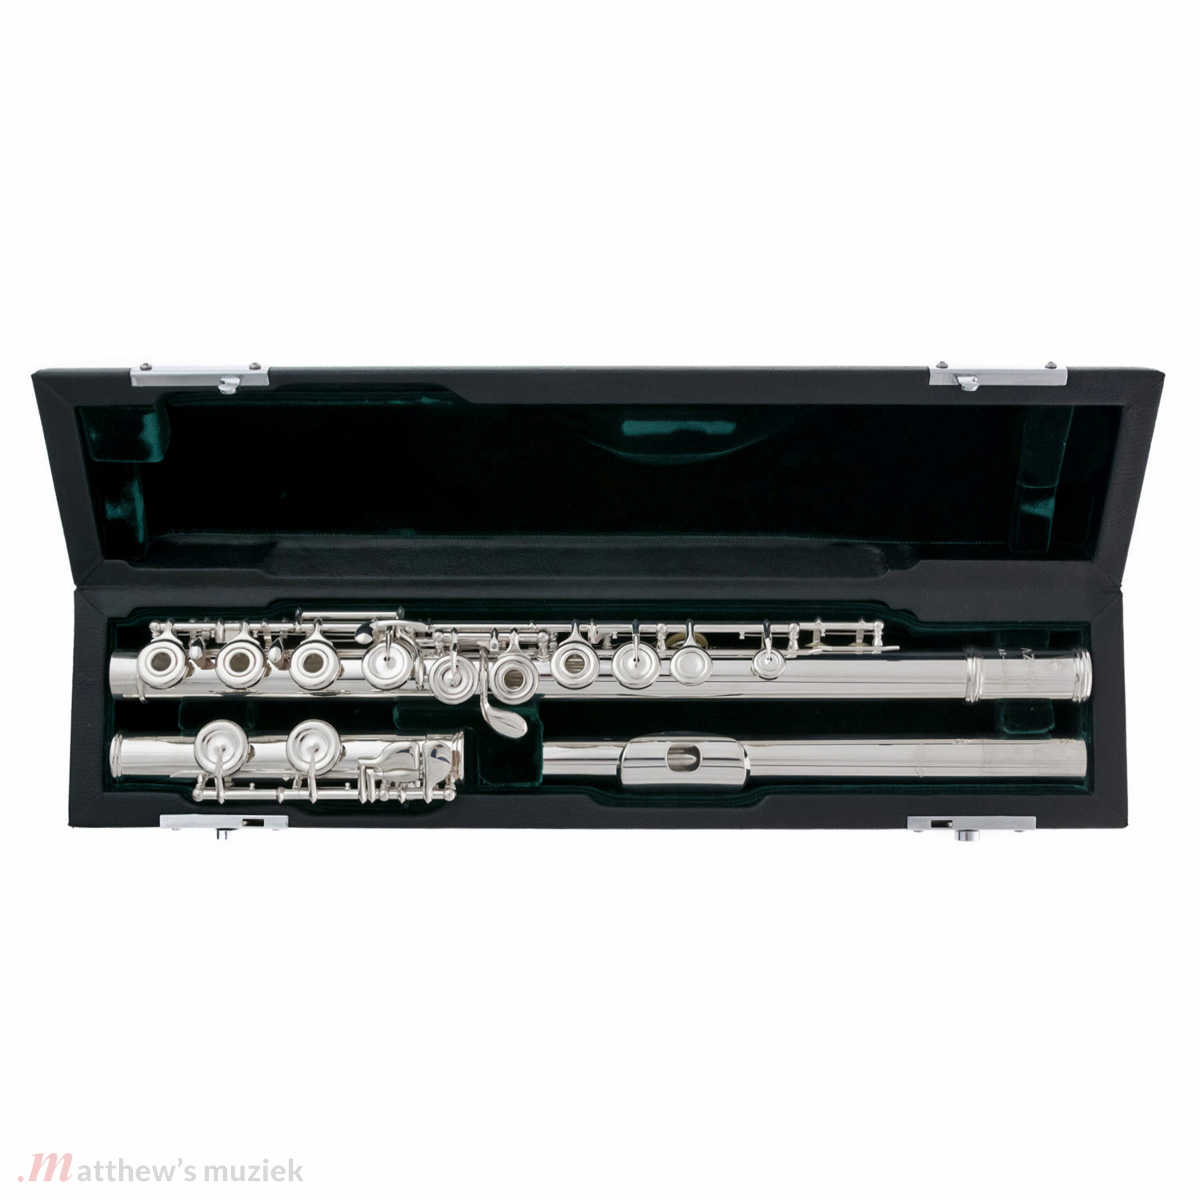 Azumi Flute - AZ Z3 RBE